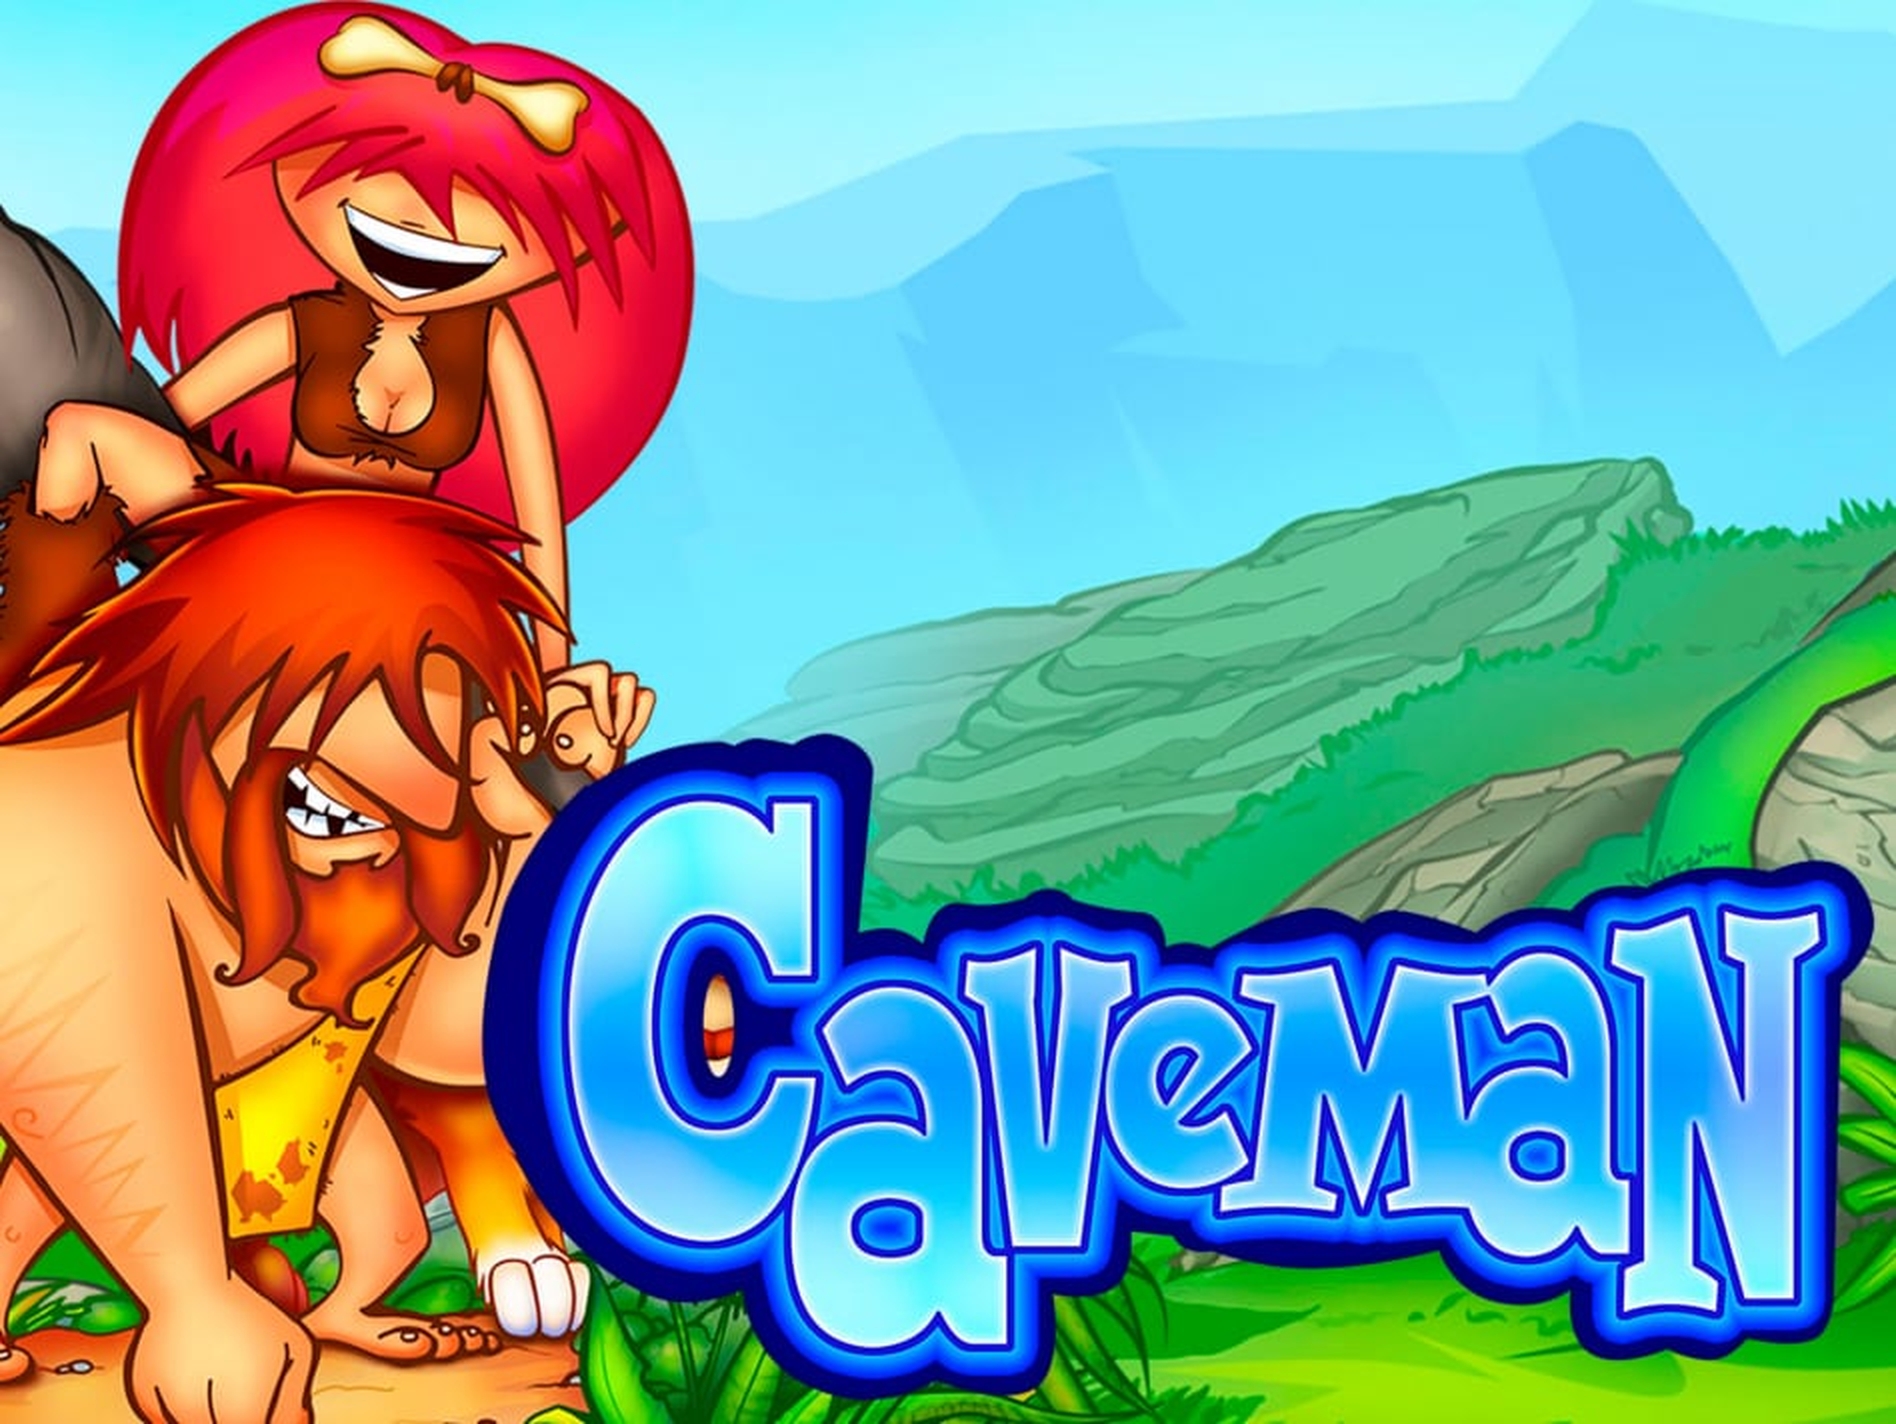 Caveman demo